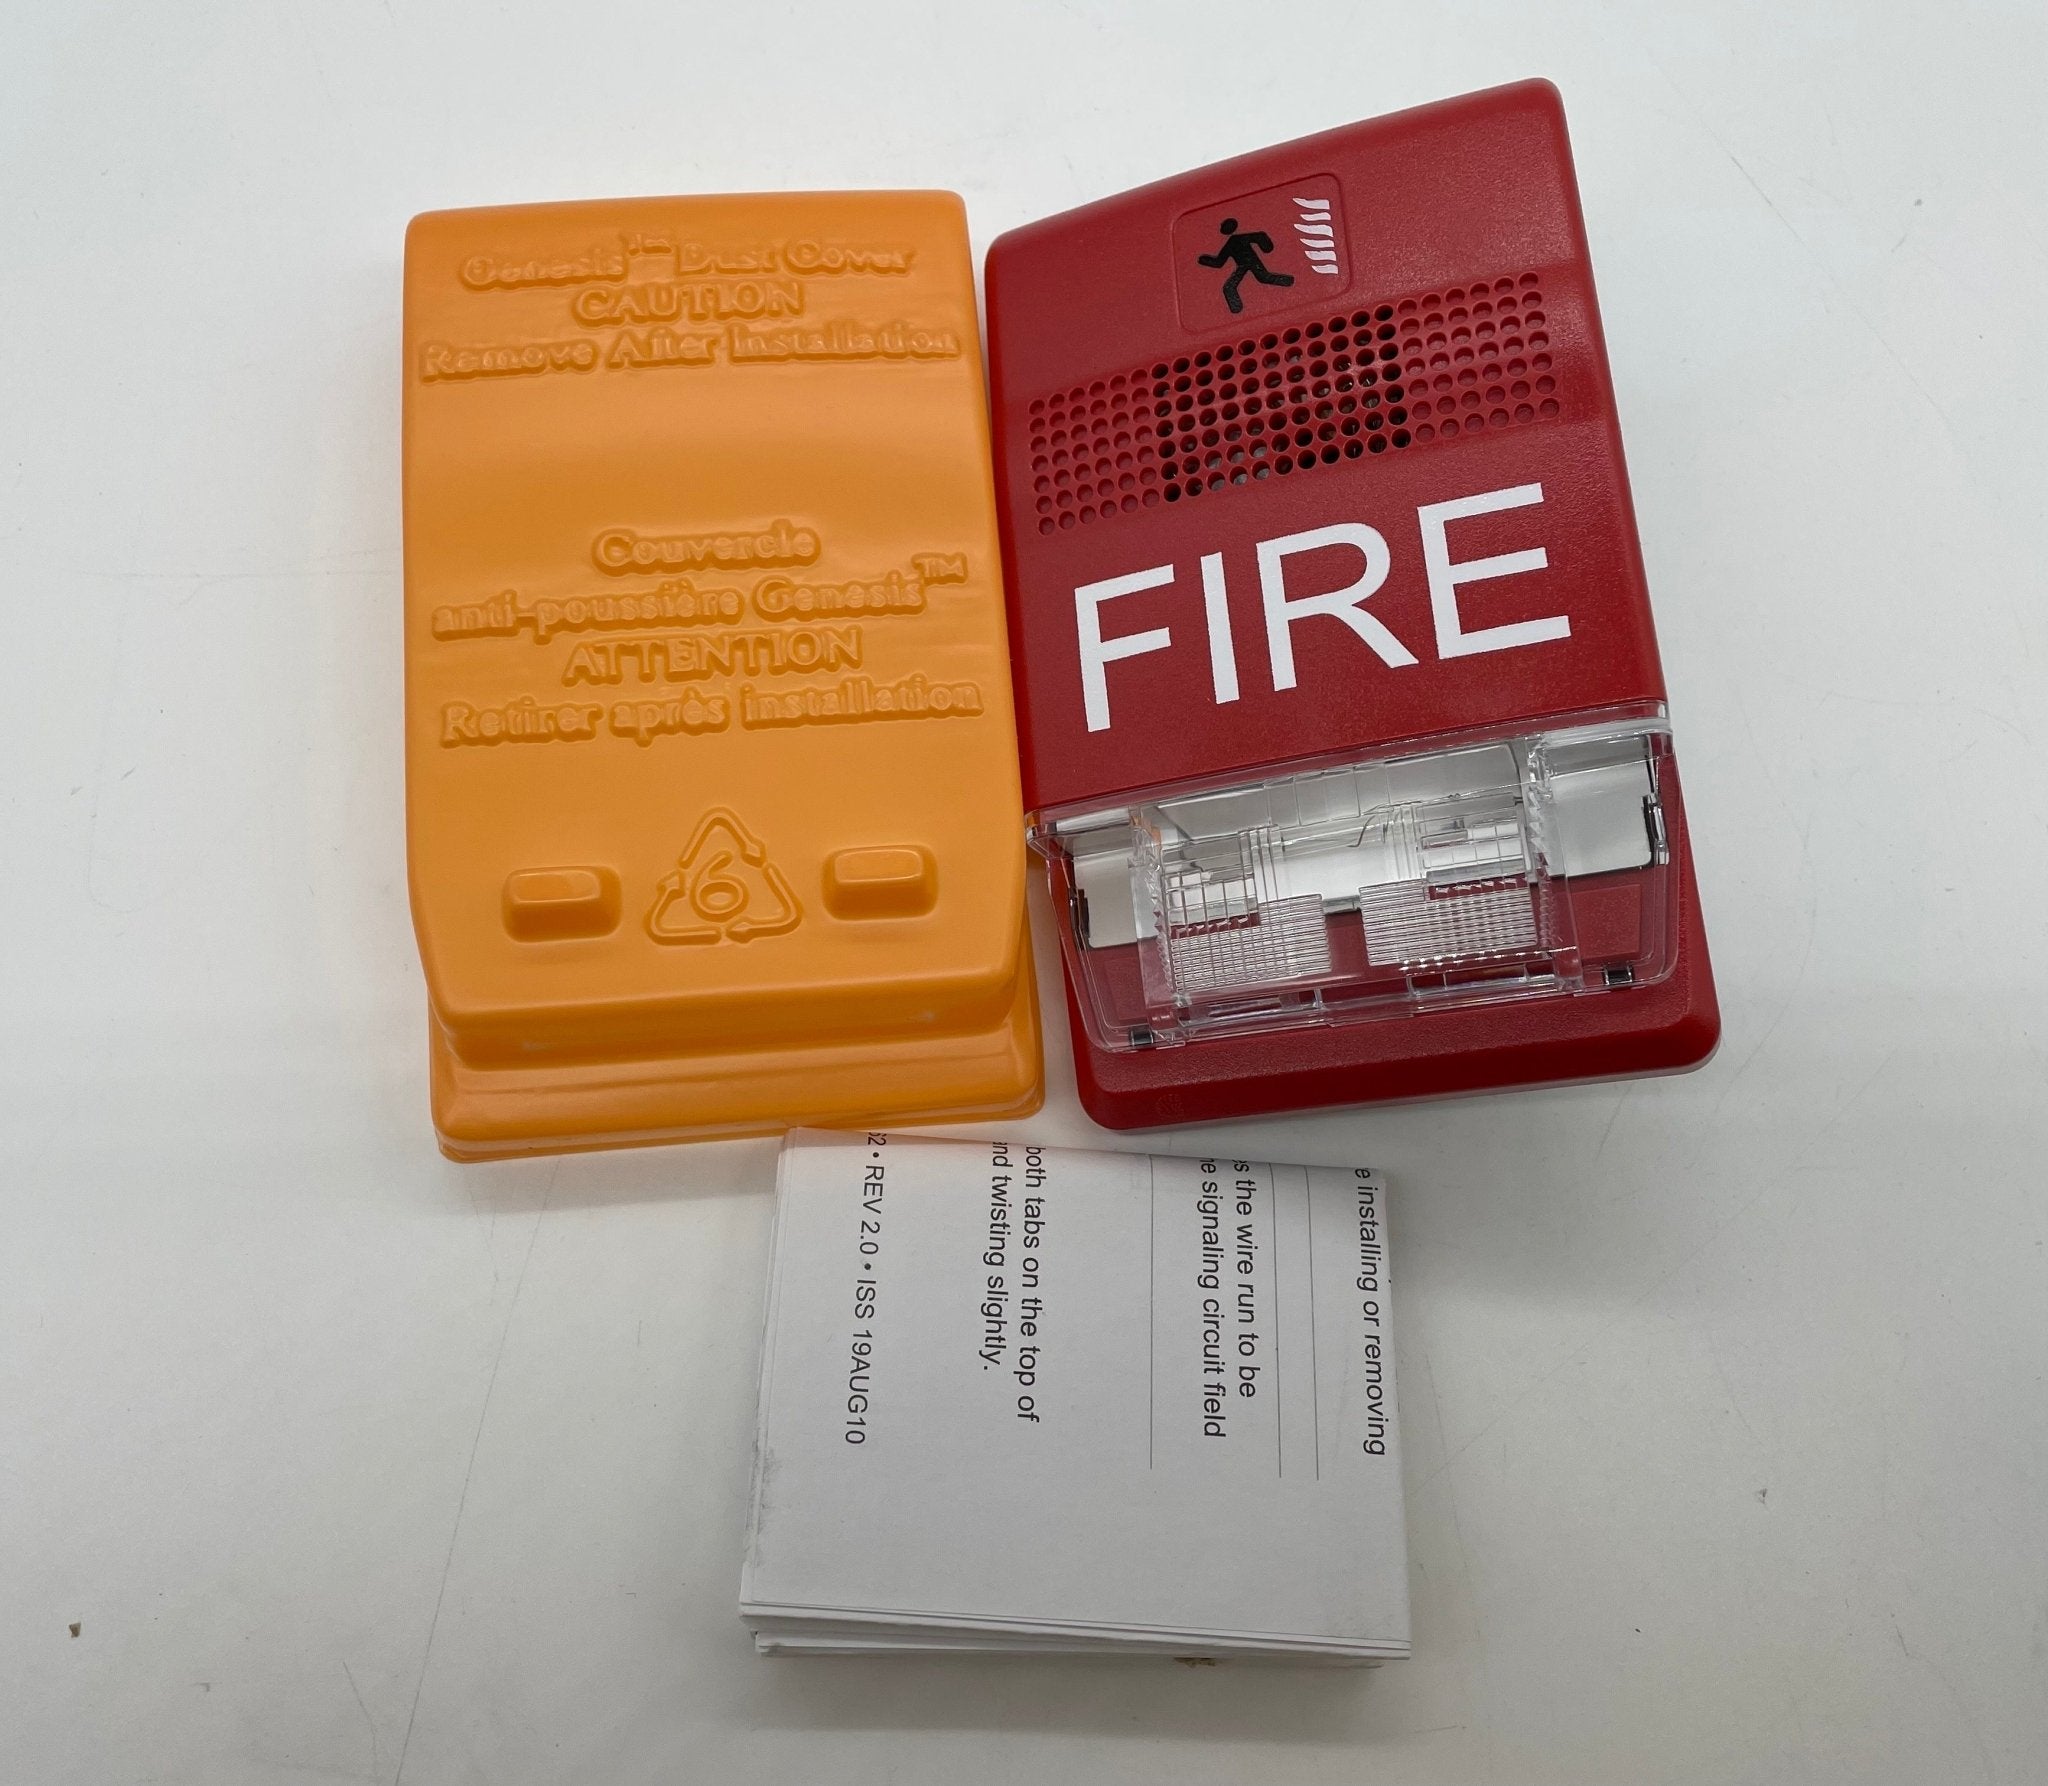 Edwards G1RF-CVM - The Fire Alarm Supplier